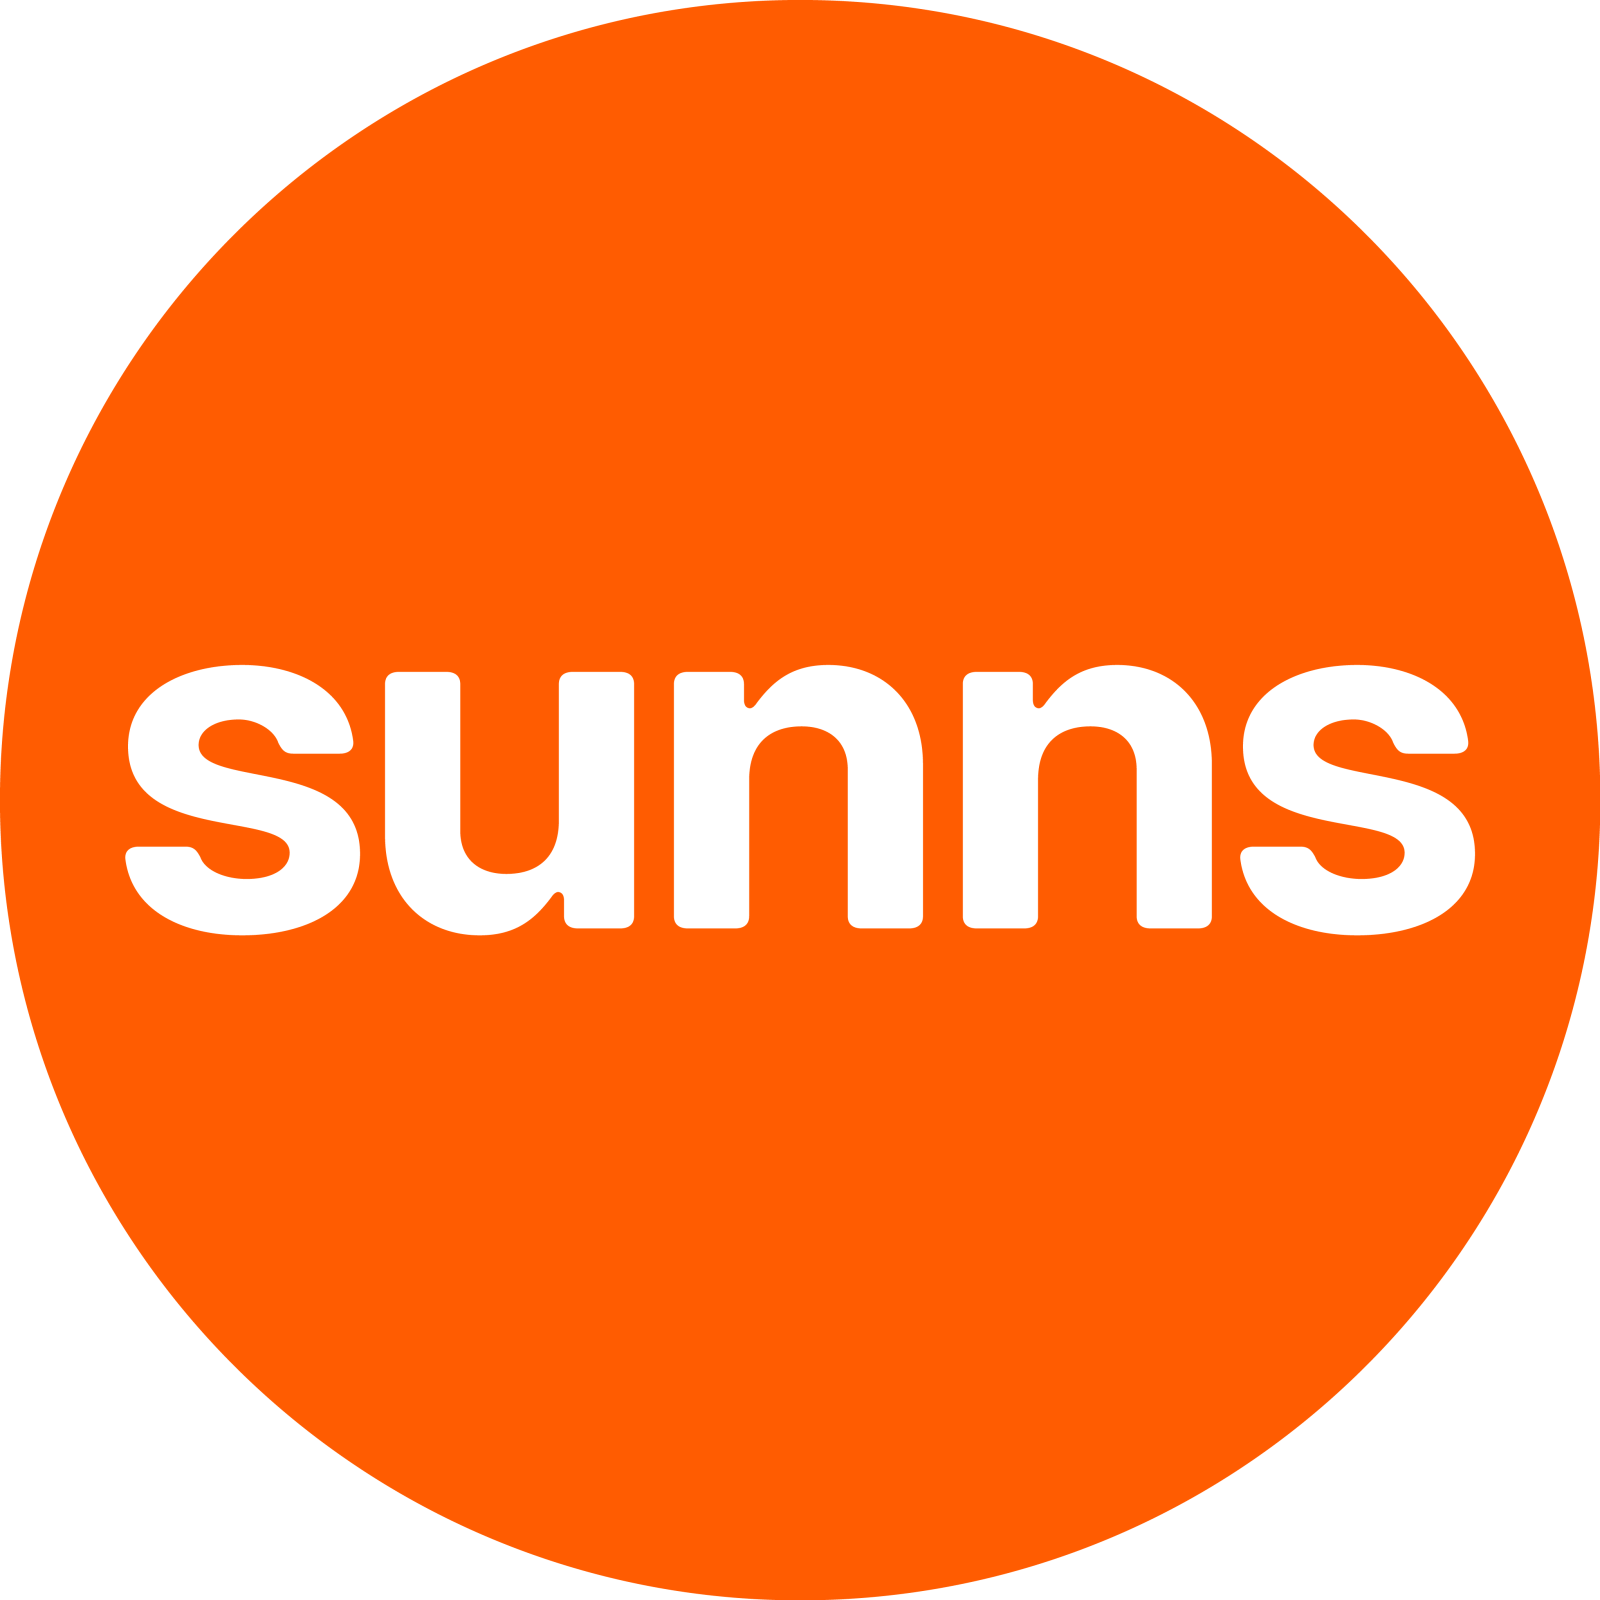 Sunns Logo Origin